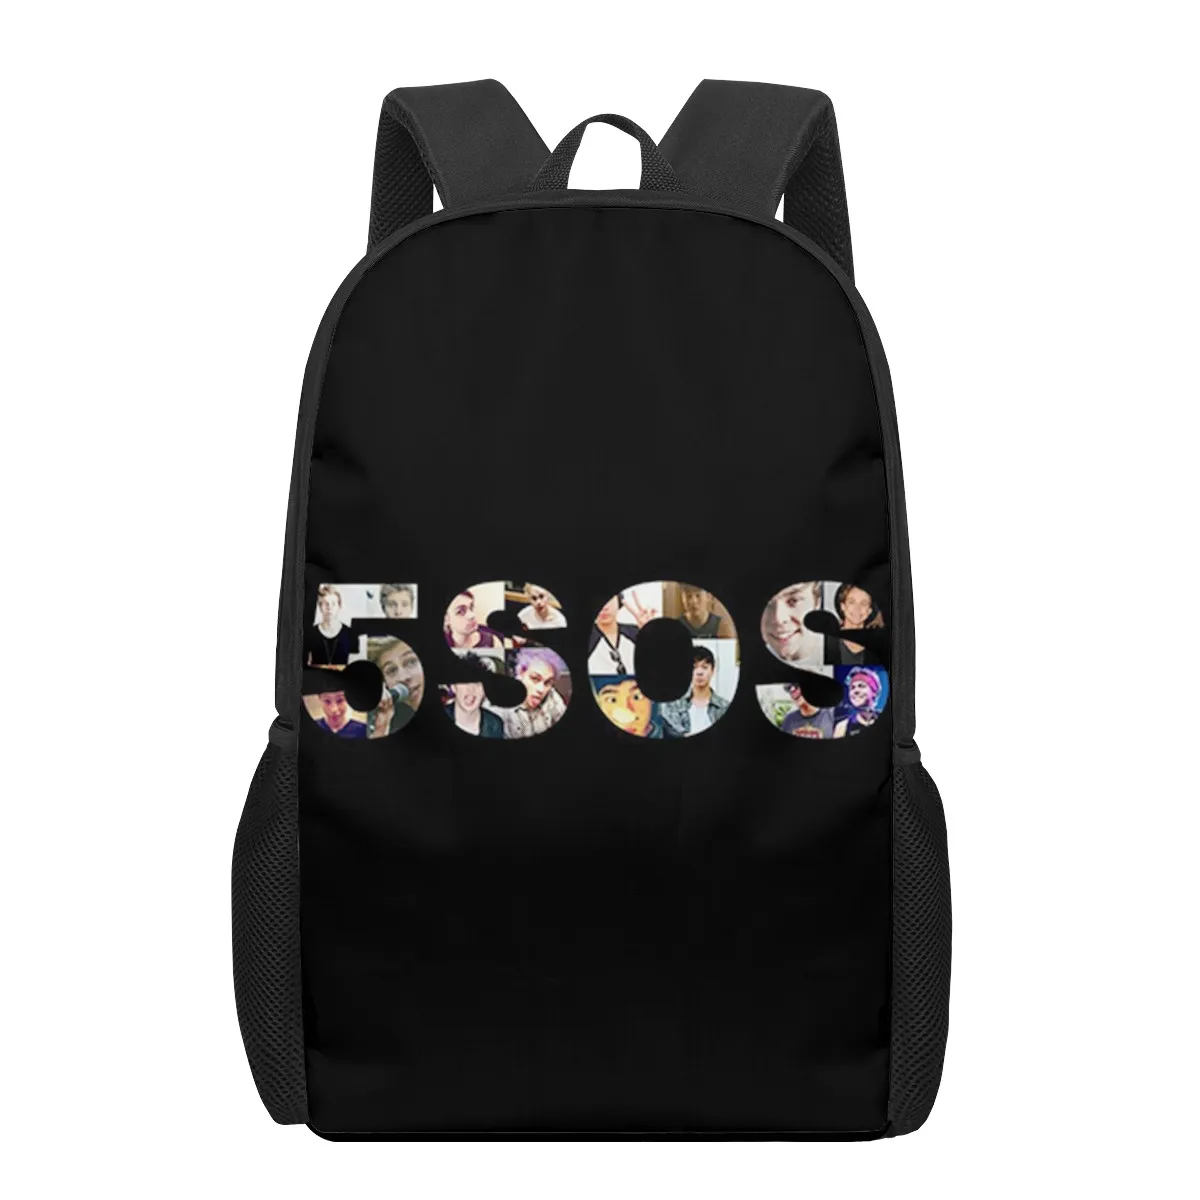 

5SOS 5 seconds of summer 3D Print School Backpack for Boys Girls Teenager Kids Book Bag Casual Shoulder Bags 16Inch Satchel Moc